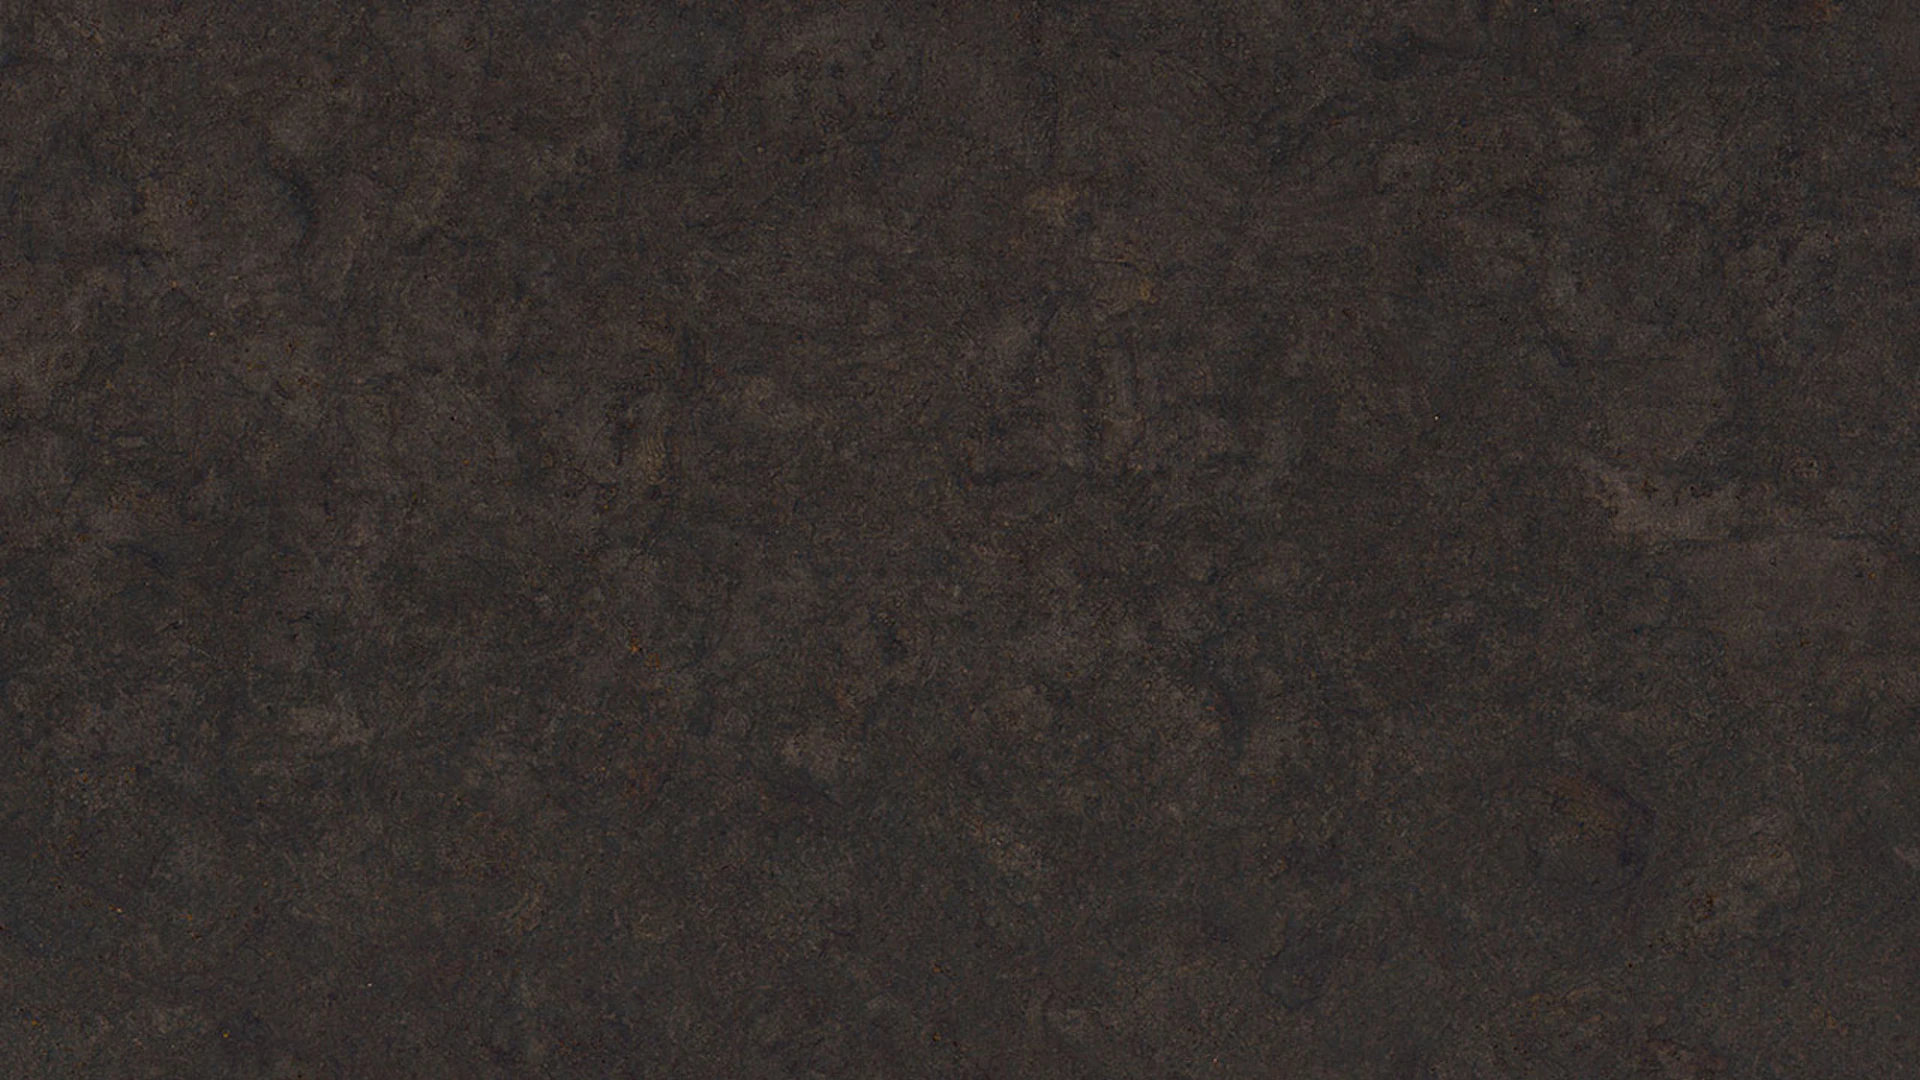 Wicanders click cork flooring - Stone Essence Concrete Midnight